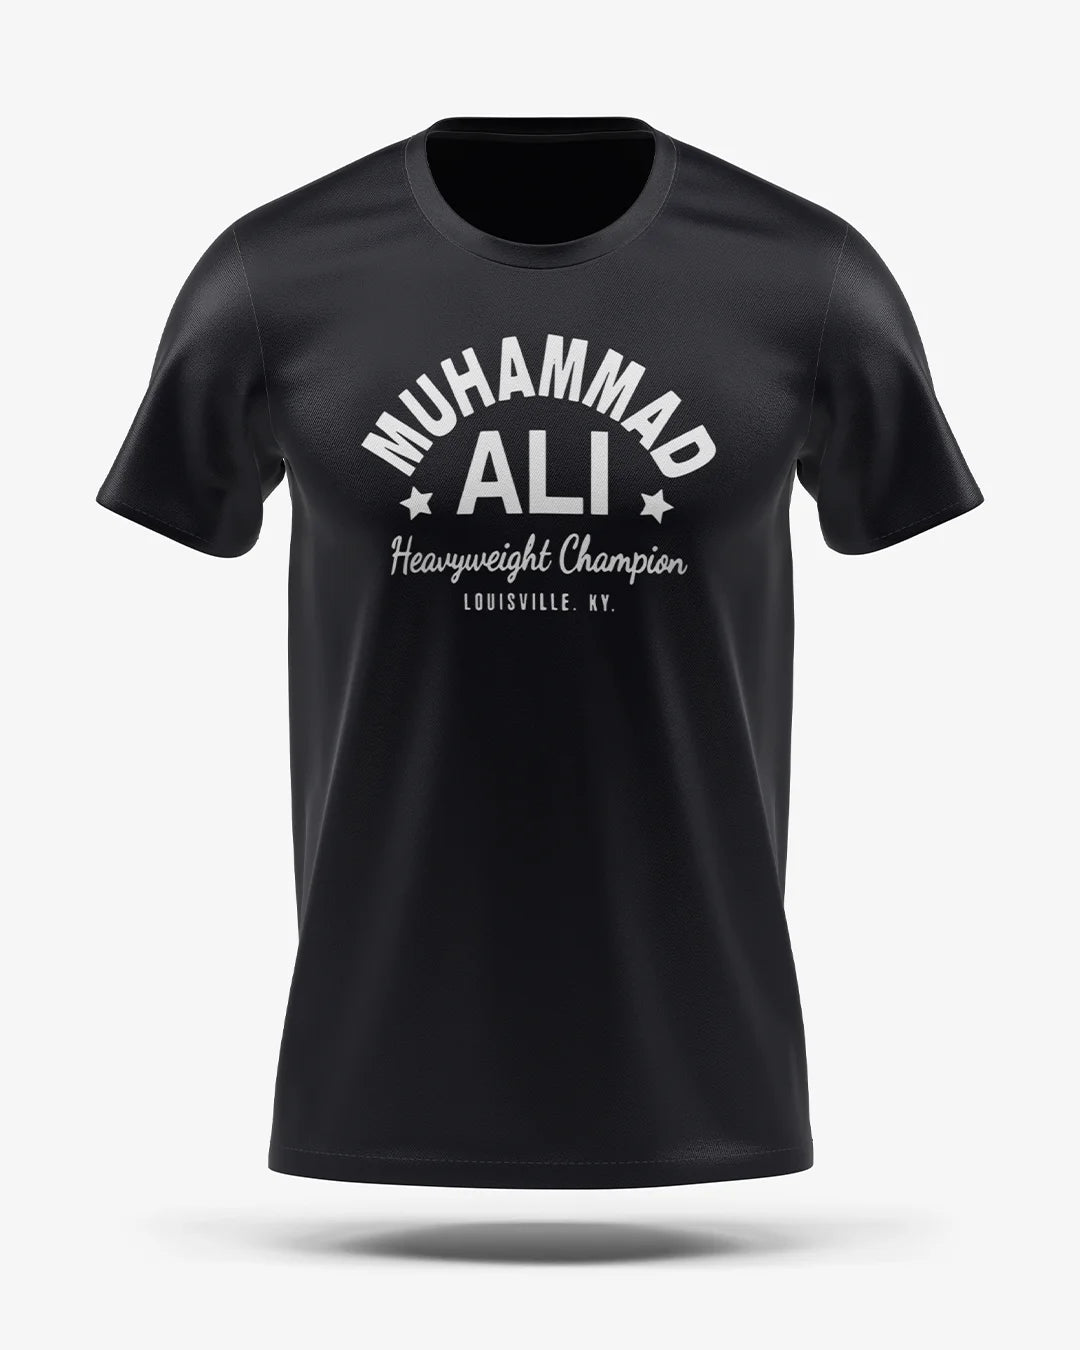 Camiseta Esporte Dry Fit - Ali Heavyweight Champion